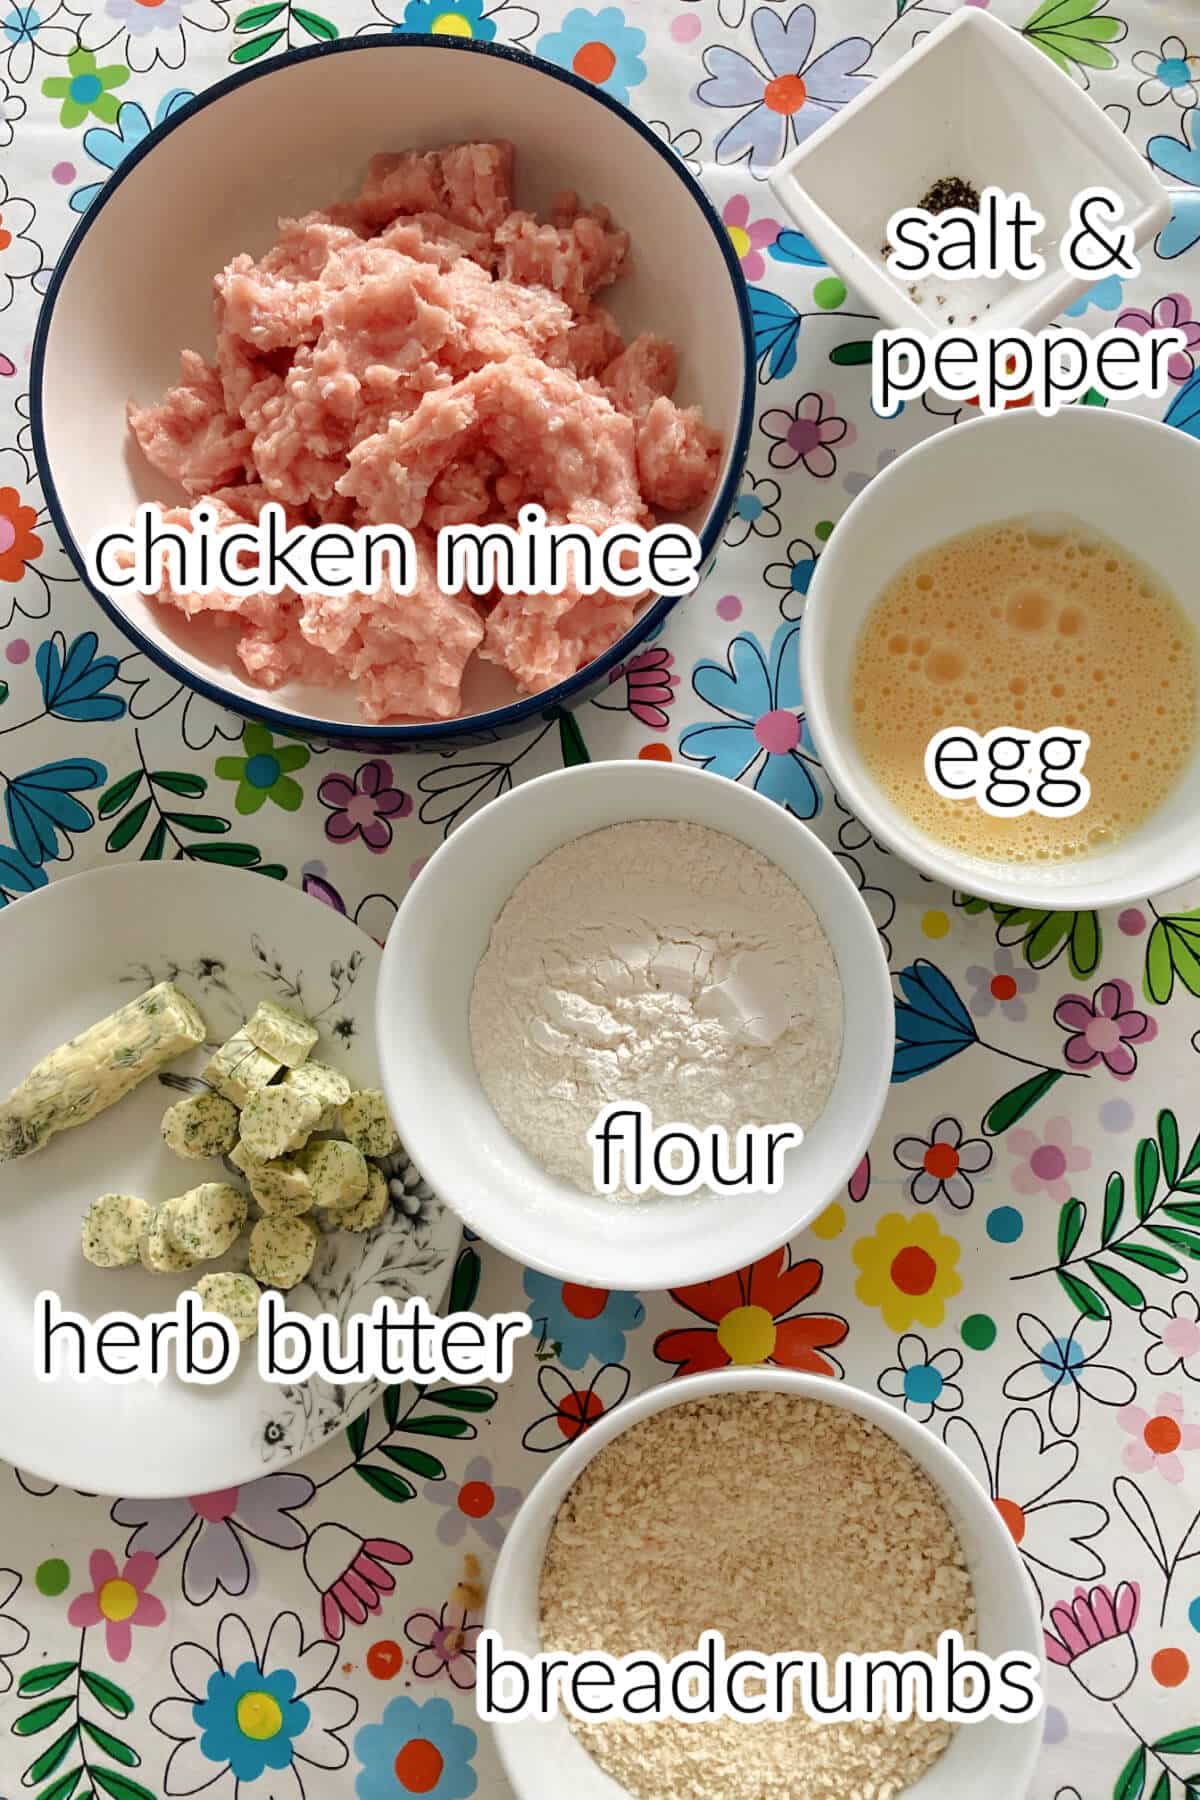 Ingredients needed to make chicken kiev balls.